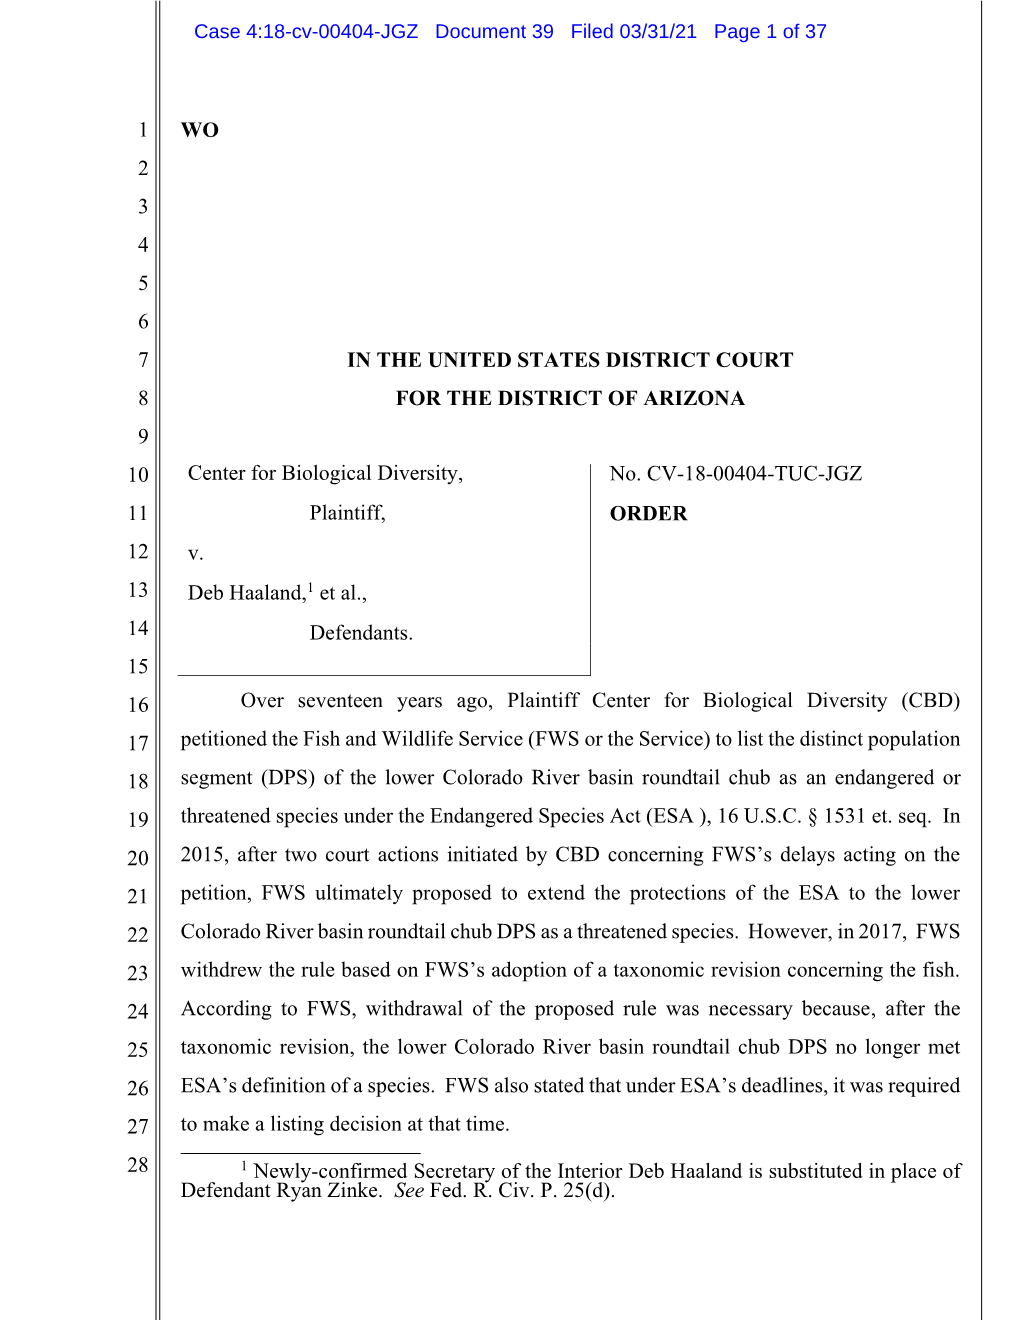 Case 4:18-Cv-00404-JGZ Document 39 Filed 03/31/21 Page 1 of 37